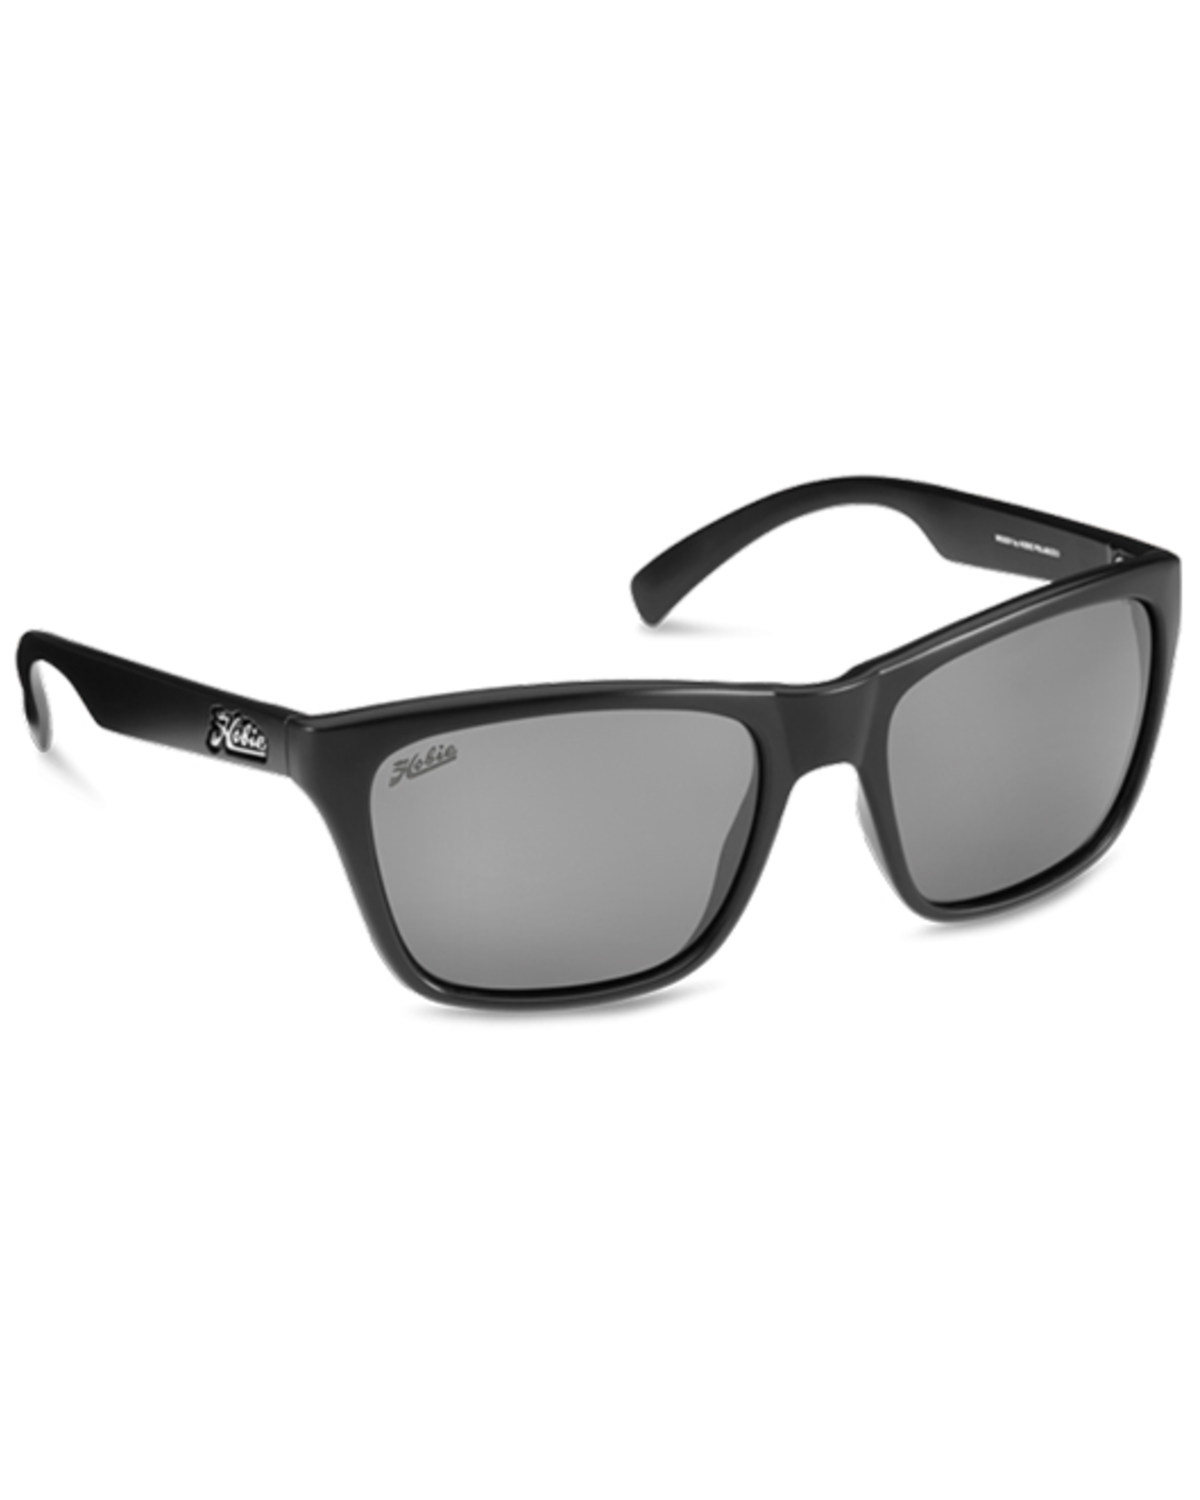 Hobie Woody Satin Black & Gray PC Polarized Sunglasses